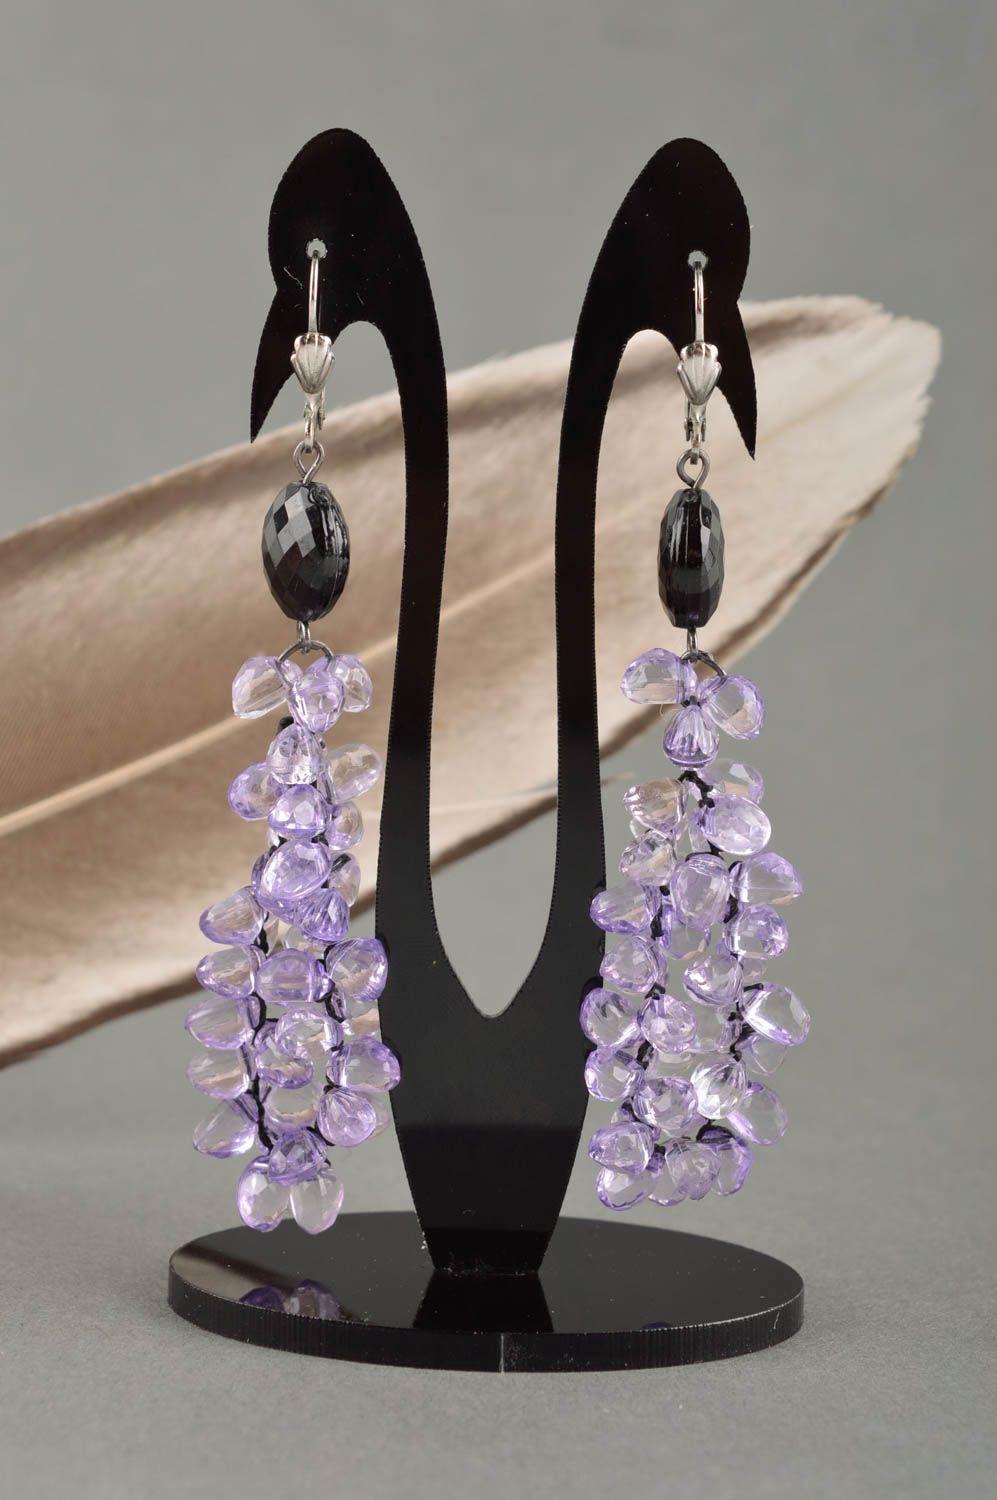 Handgemachte Ohrringe in Lila Mode Schmuck Juwelier Modeschmuck mit Kristallen foto 1